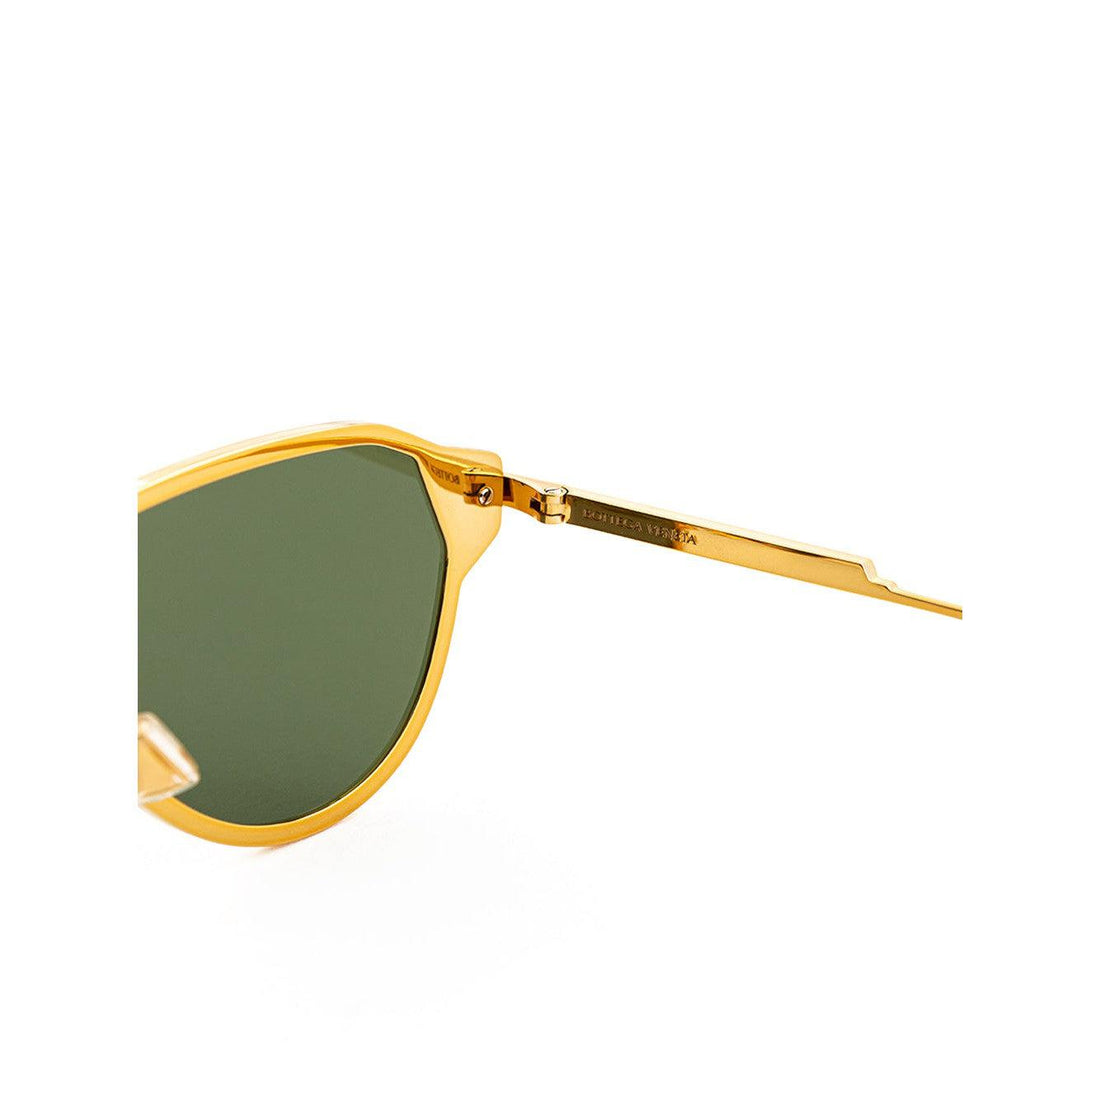 Bottega Veneta Elegant Golden Metal Sunglasses with Green Lens